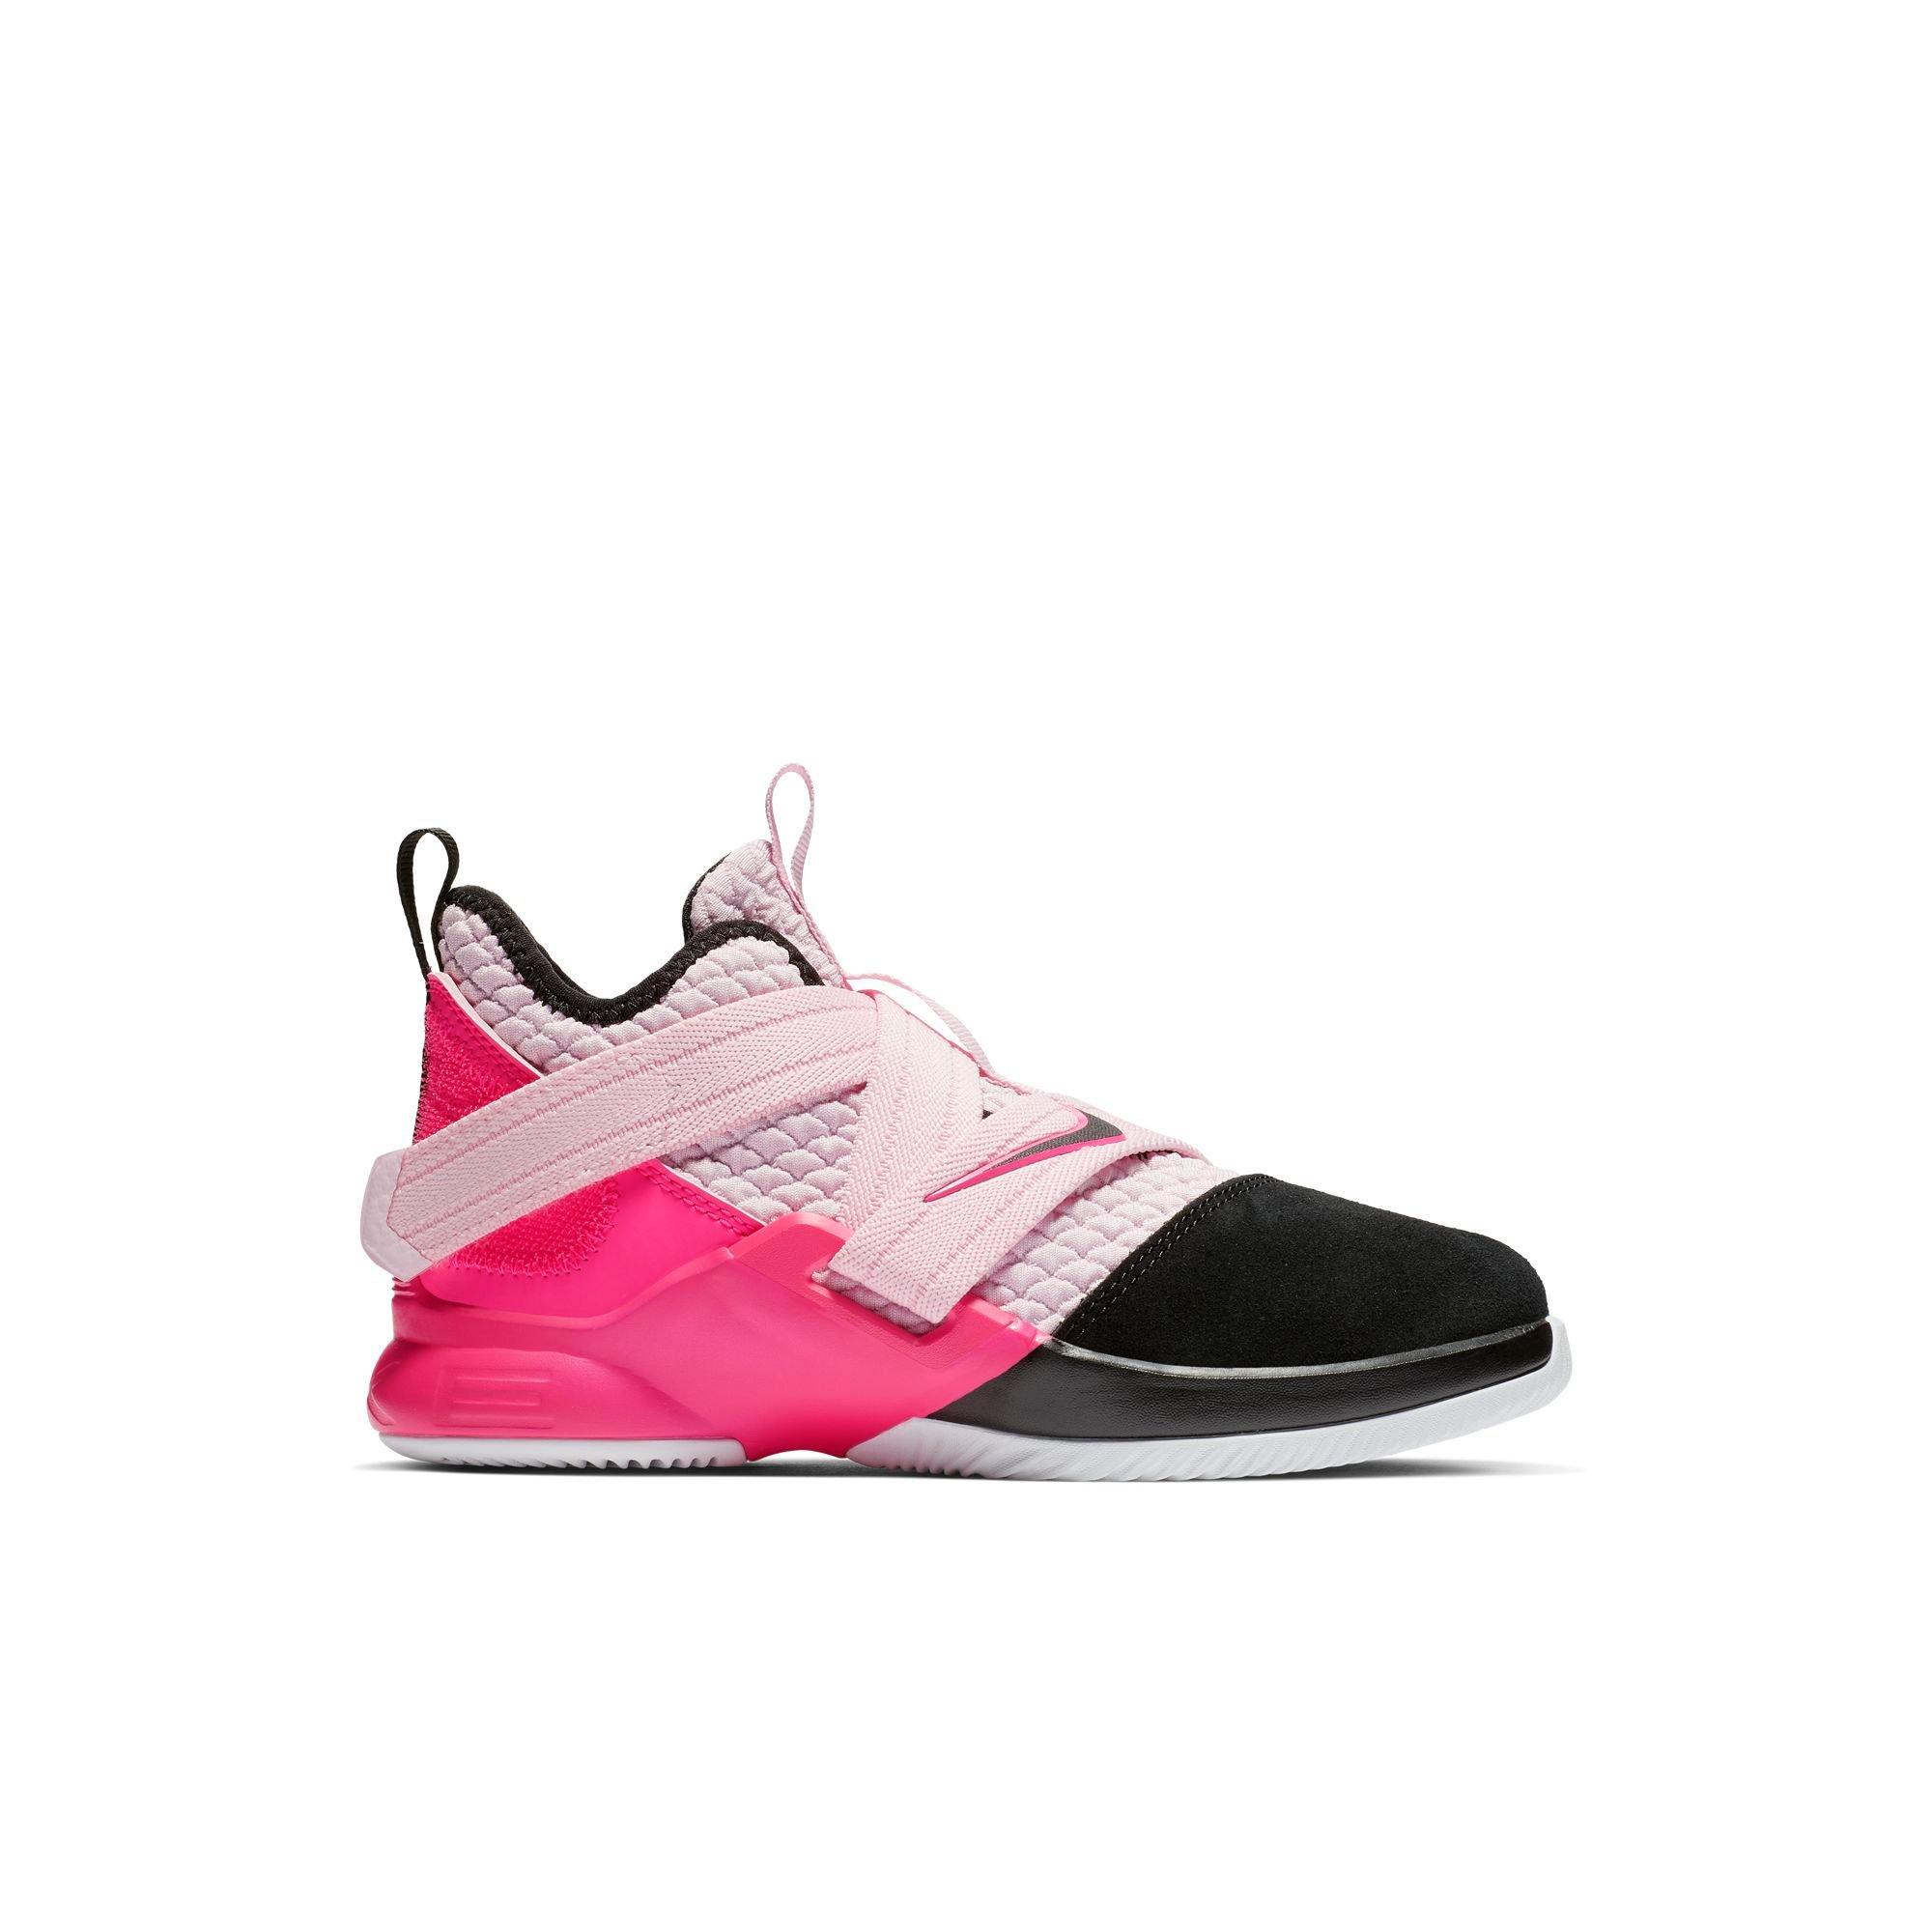 lebron shoes kids pink